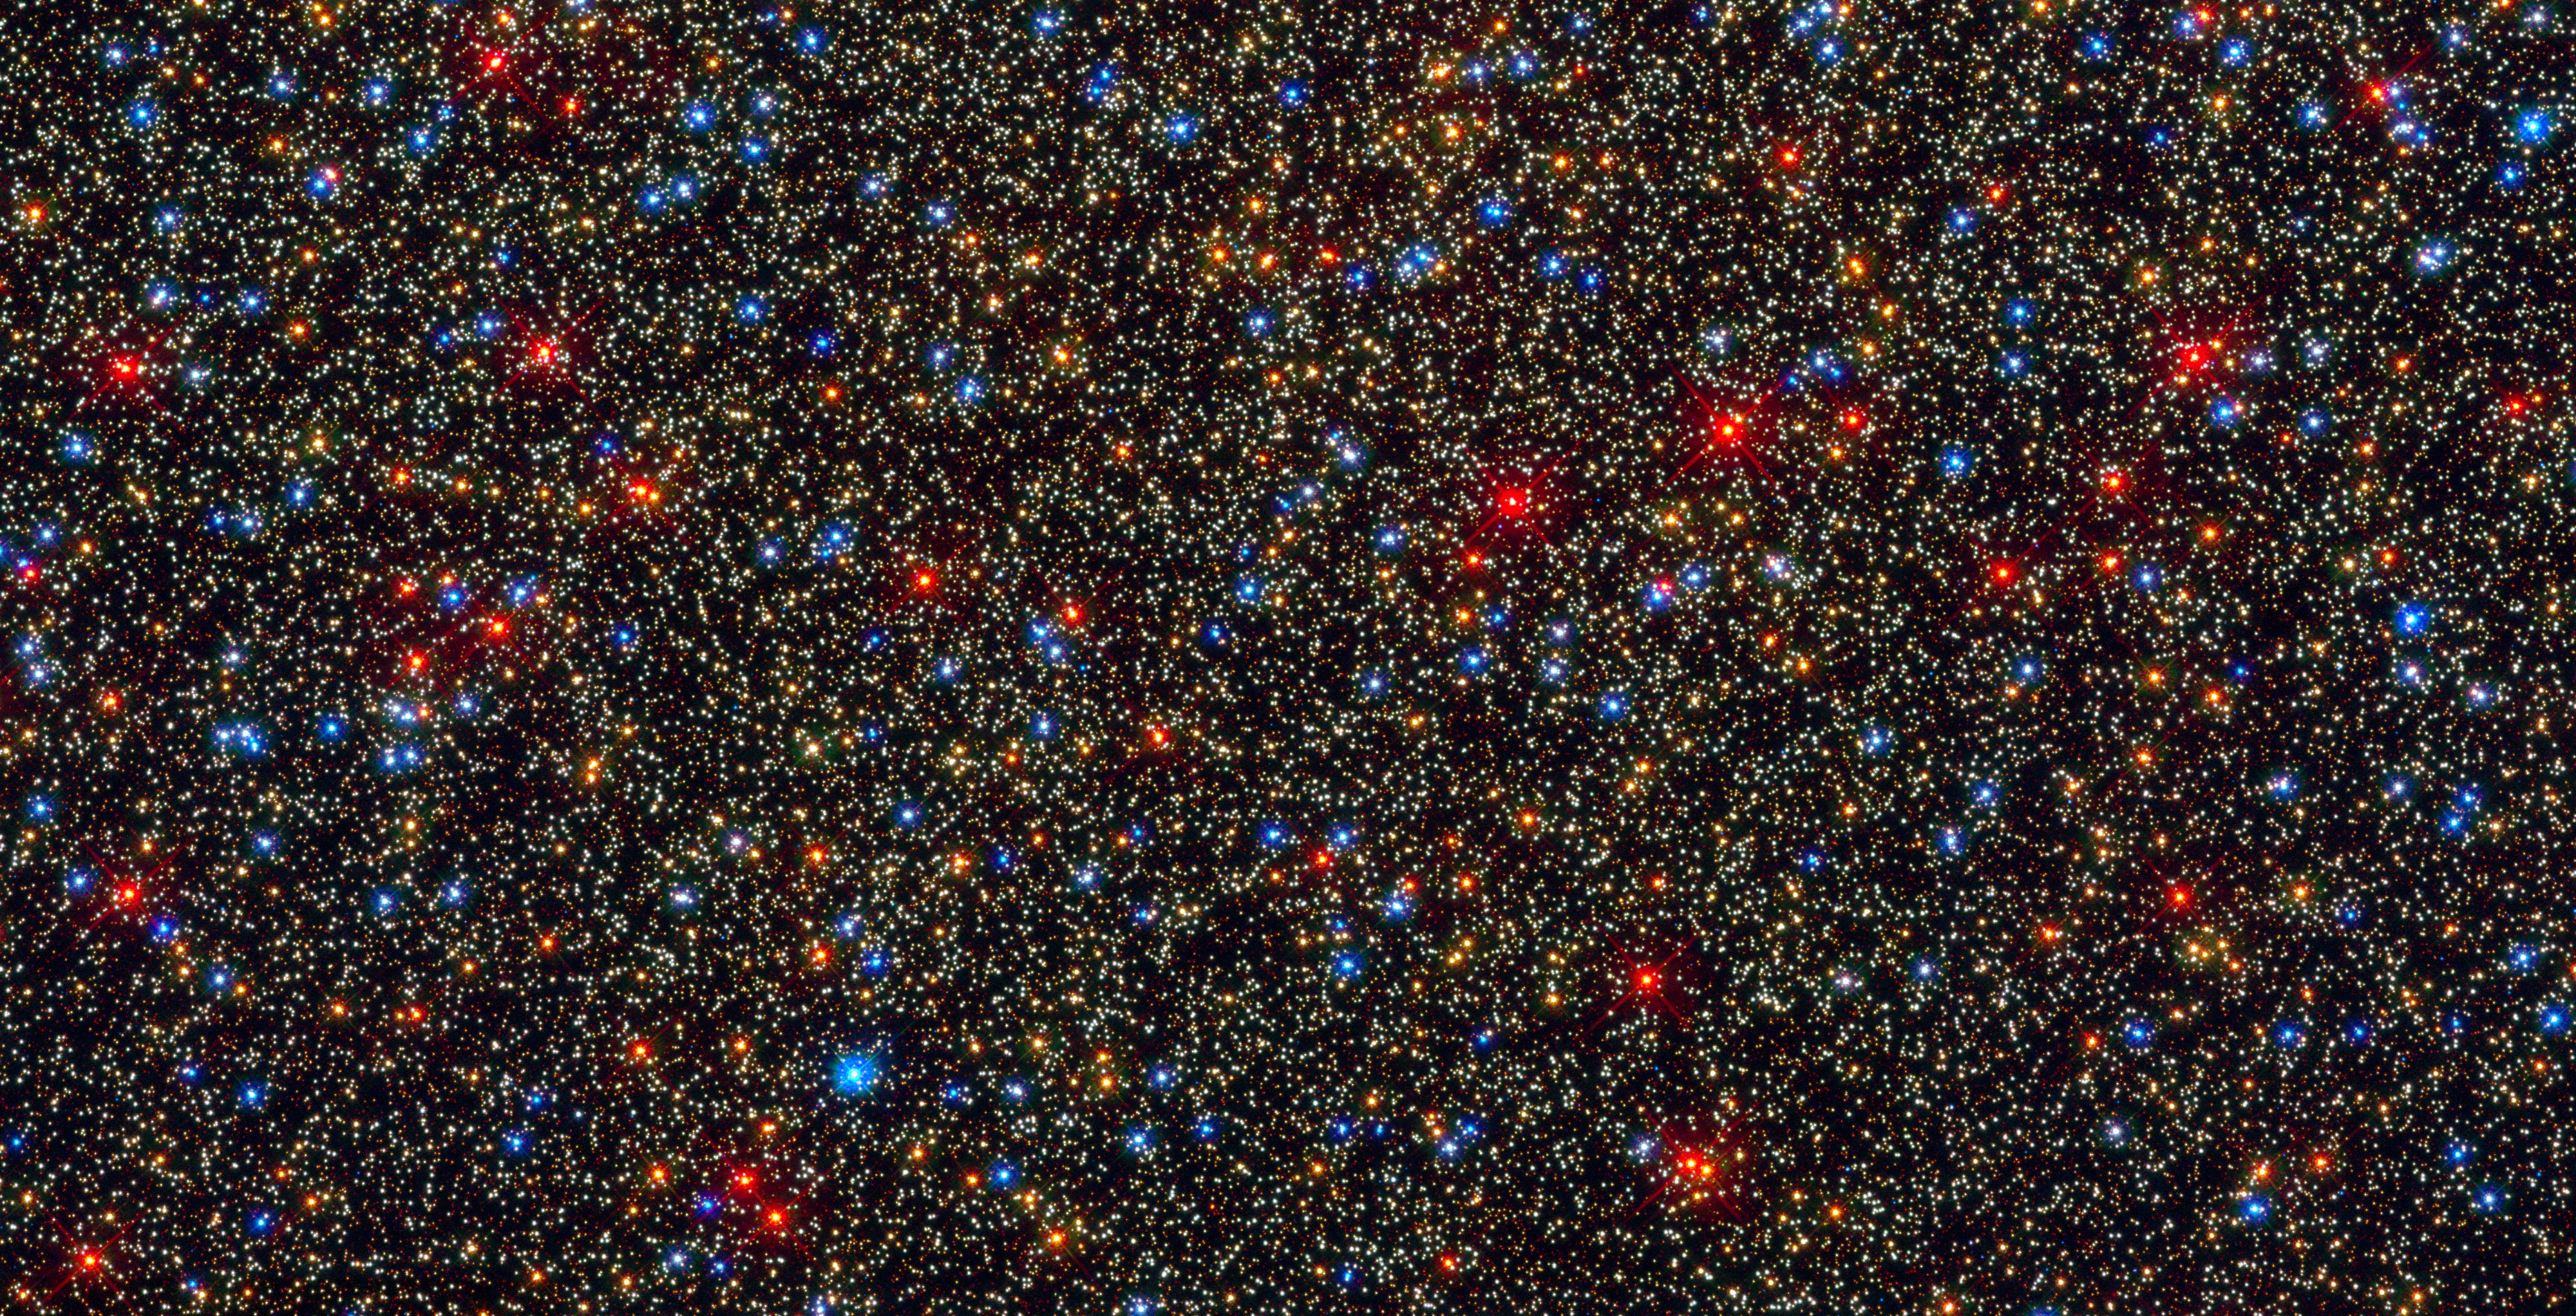 Globular star cluster Omega Centauri (NGC 5139, by the Hubble Space Telescope)